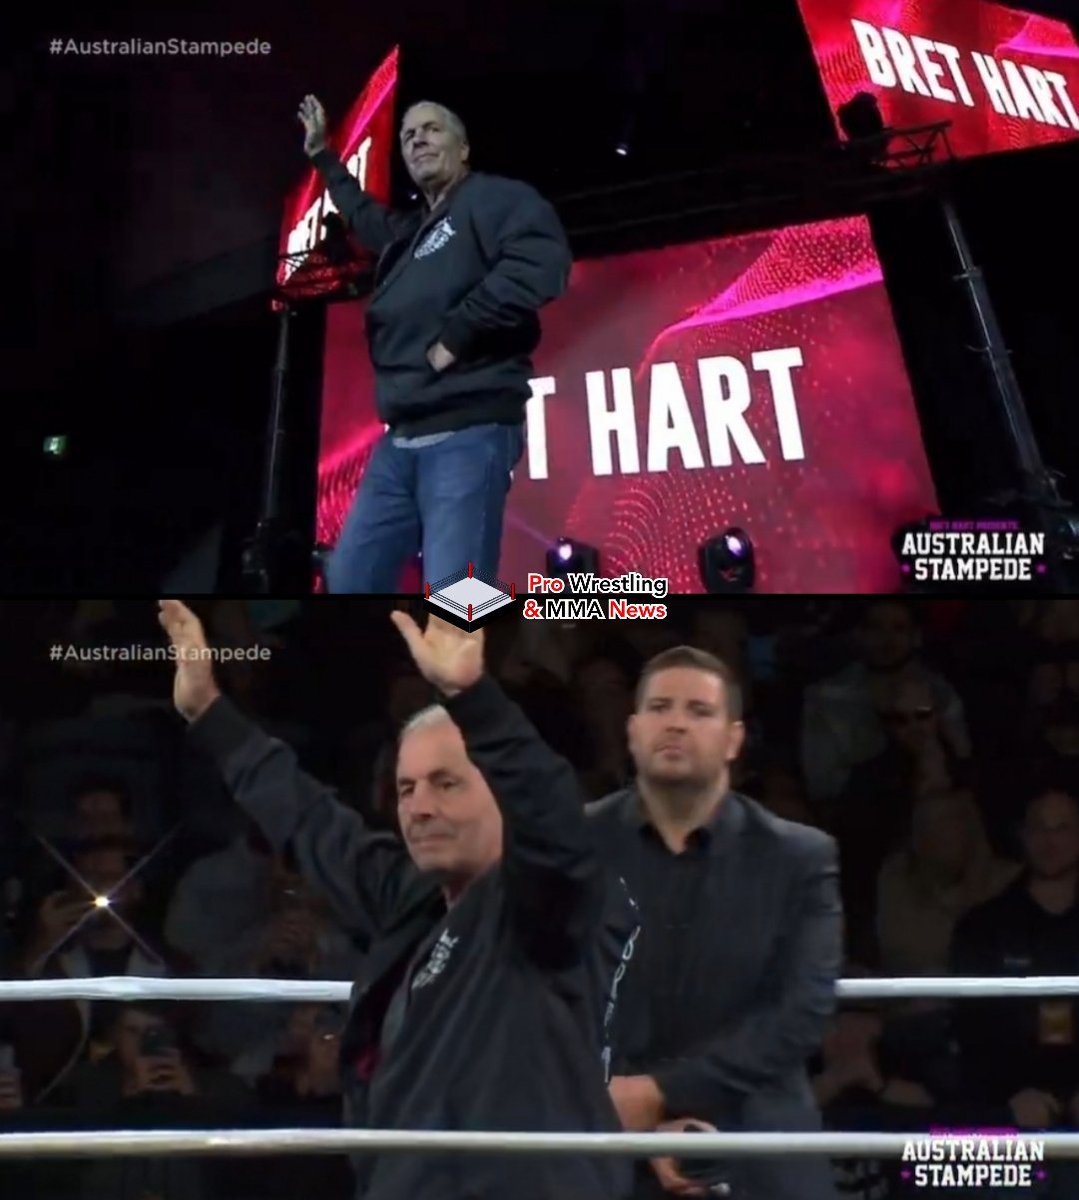 #WWE Legend Bret Hart is at #AustralianStampede